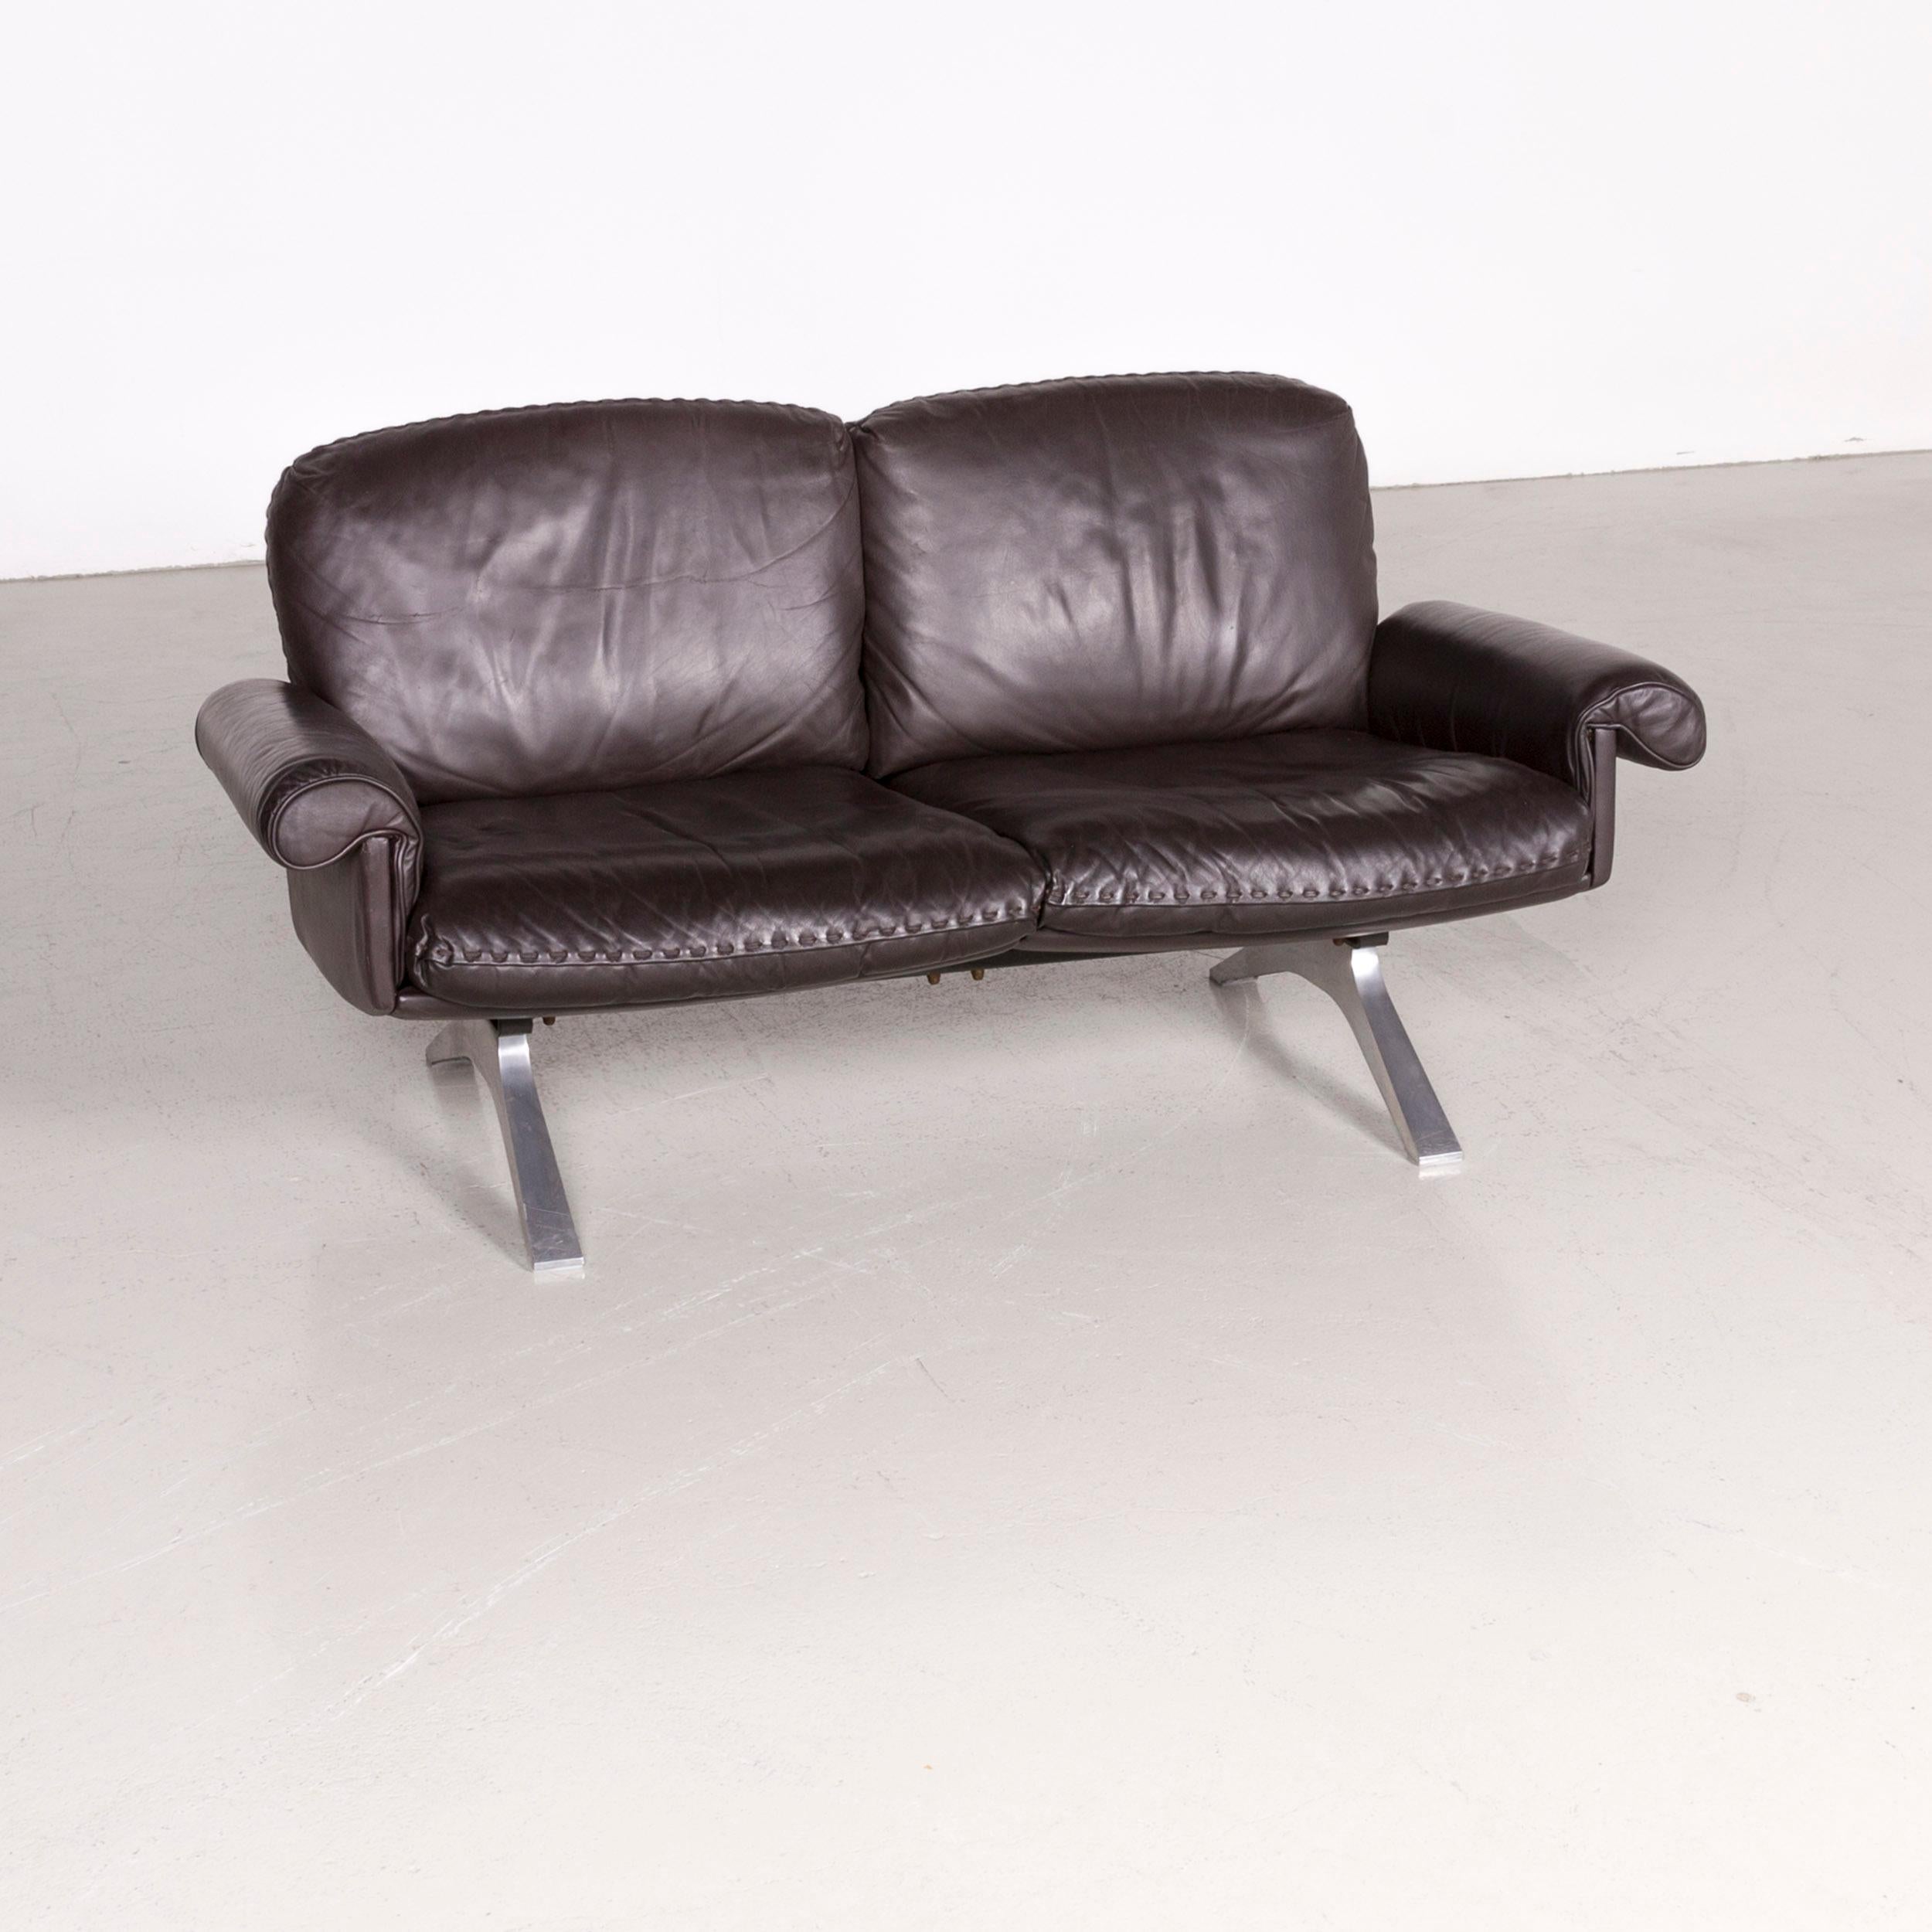 De Sede designer Ds 31 designer leather sofa brown two-seat couch.